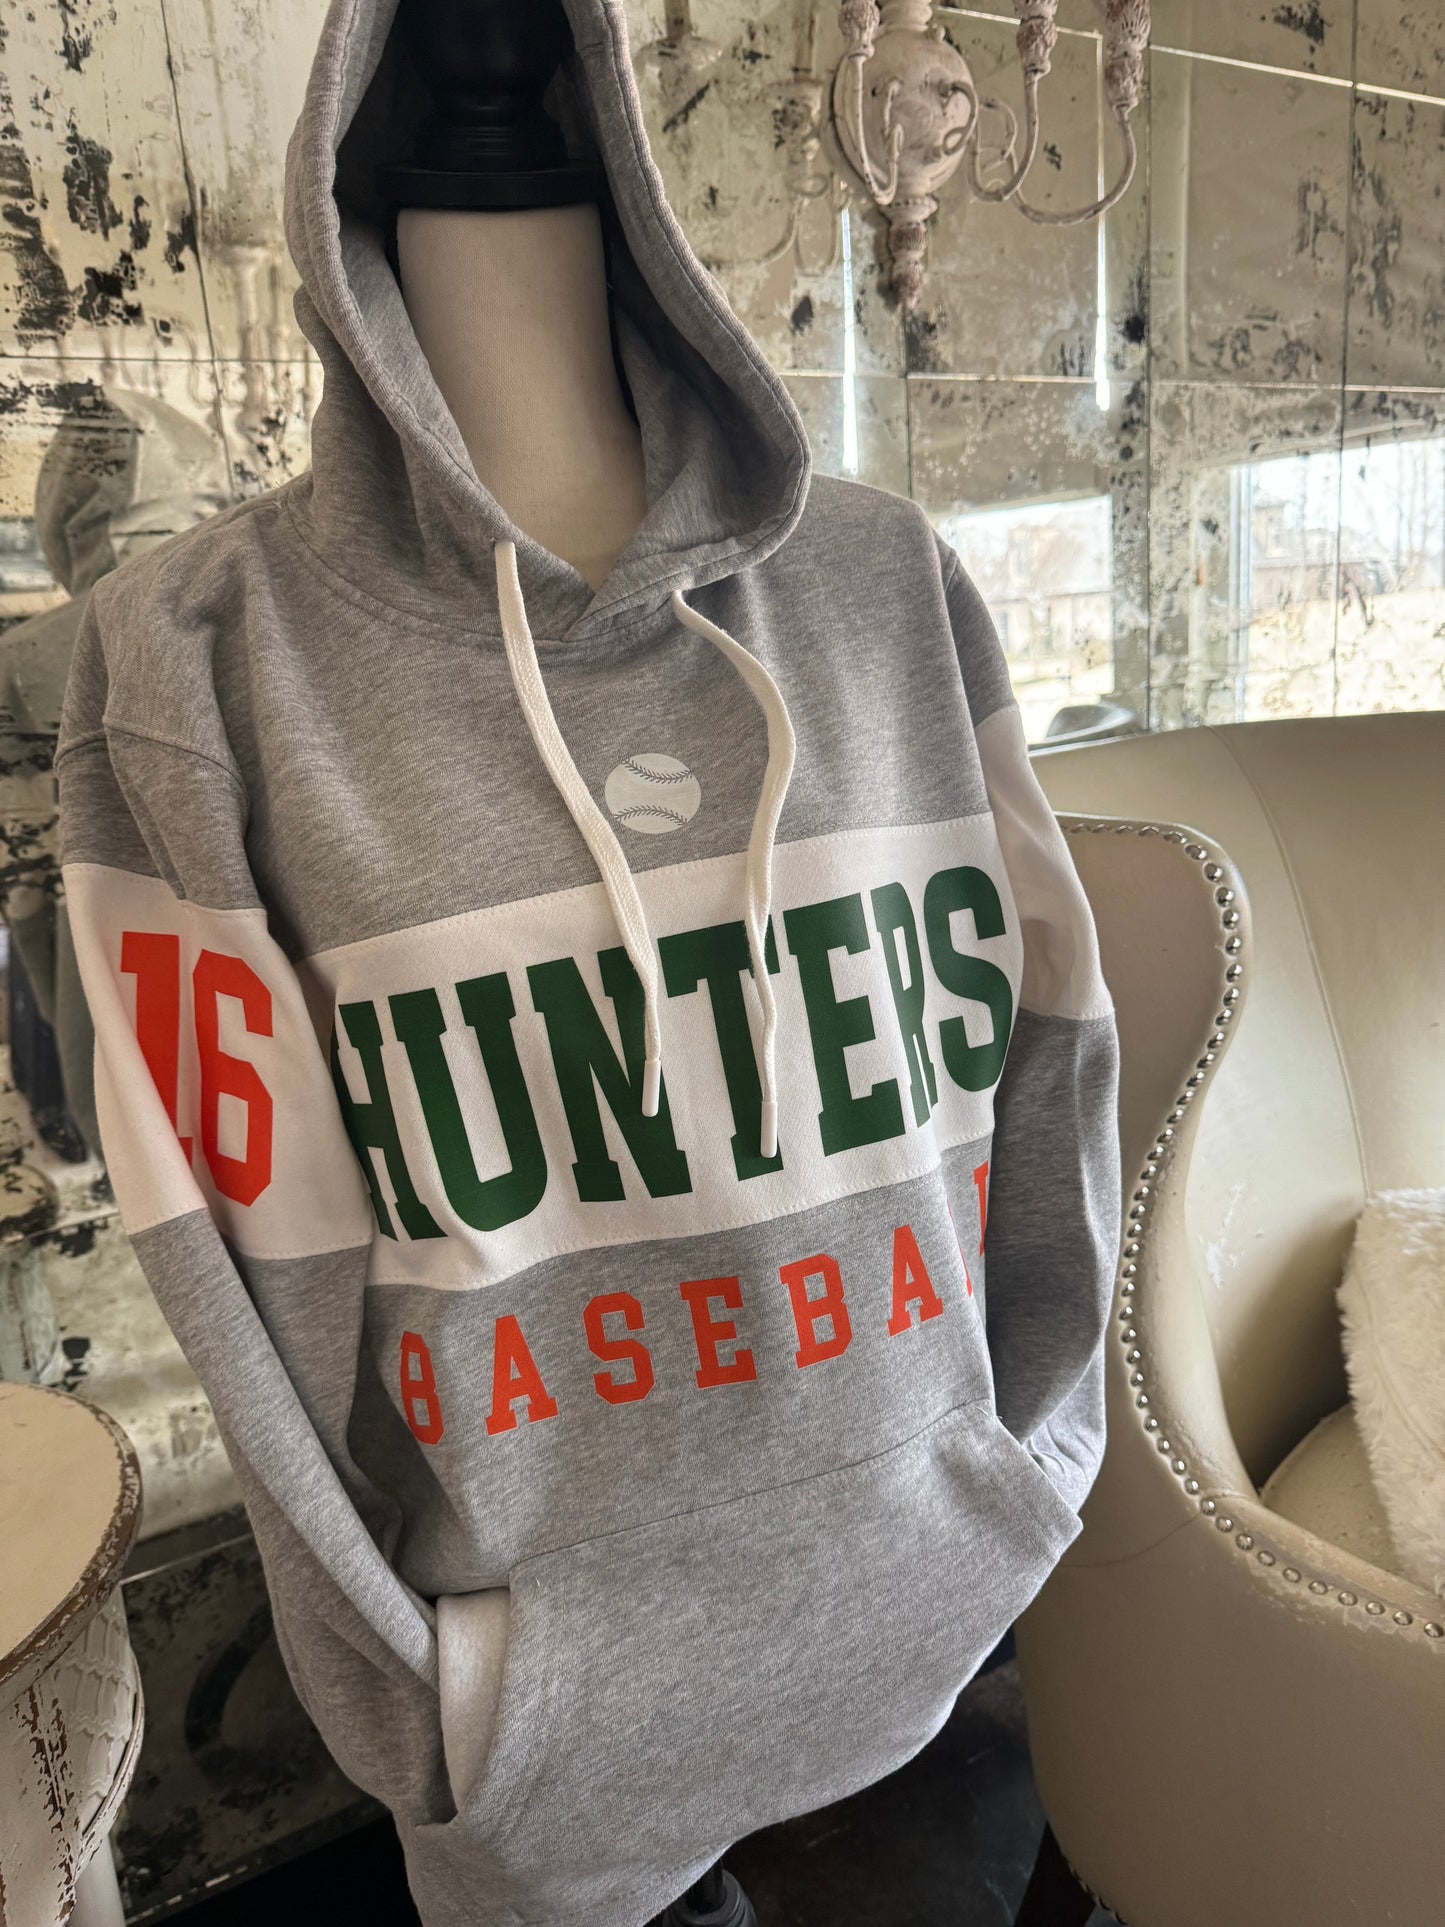 Wow Factor Themed/  Custom Personalized Baseball Design J. America - Varsity Fleece Colorblocked Hooded Sweatshirt Hoodie